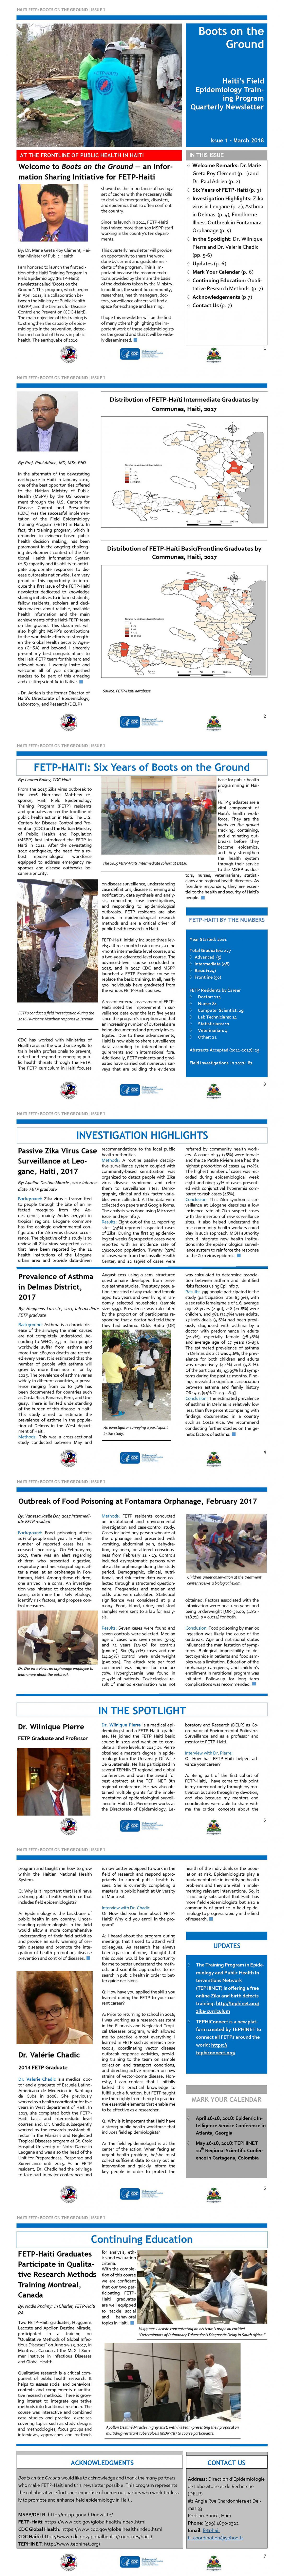 Haiti’s Field Epidemiology Training Program Quarterly Newsletter